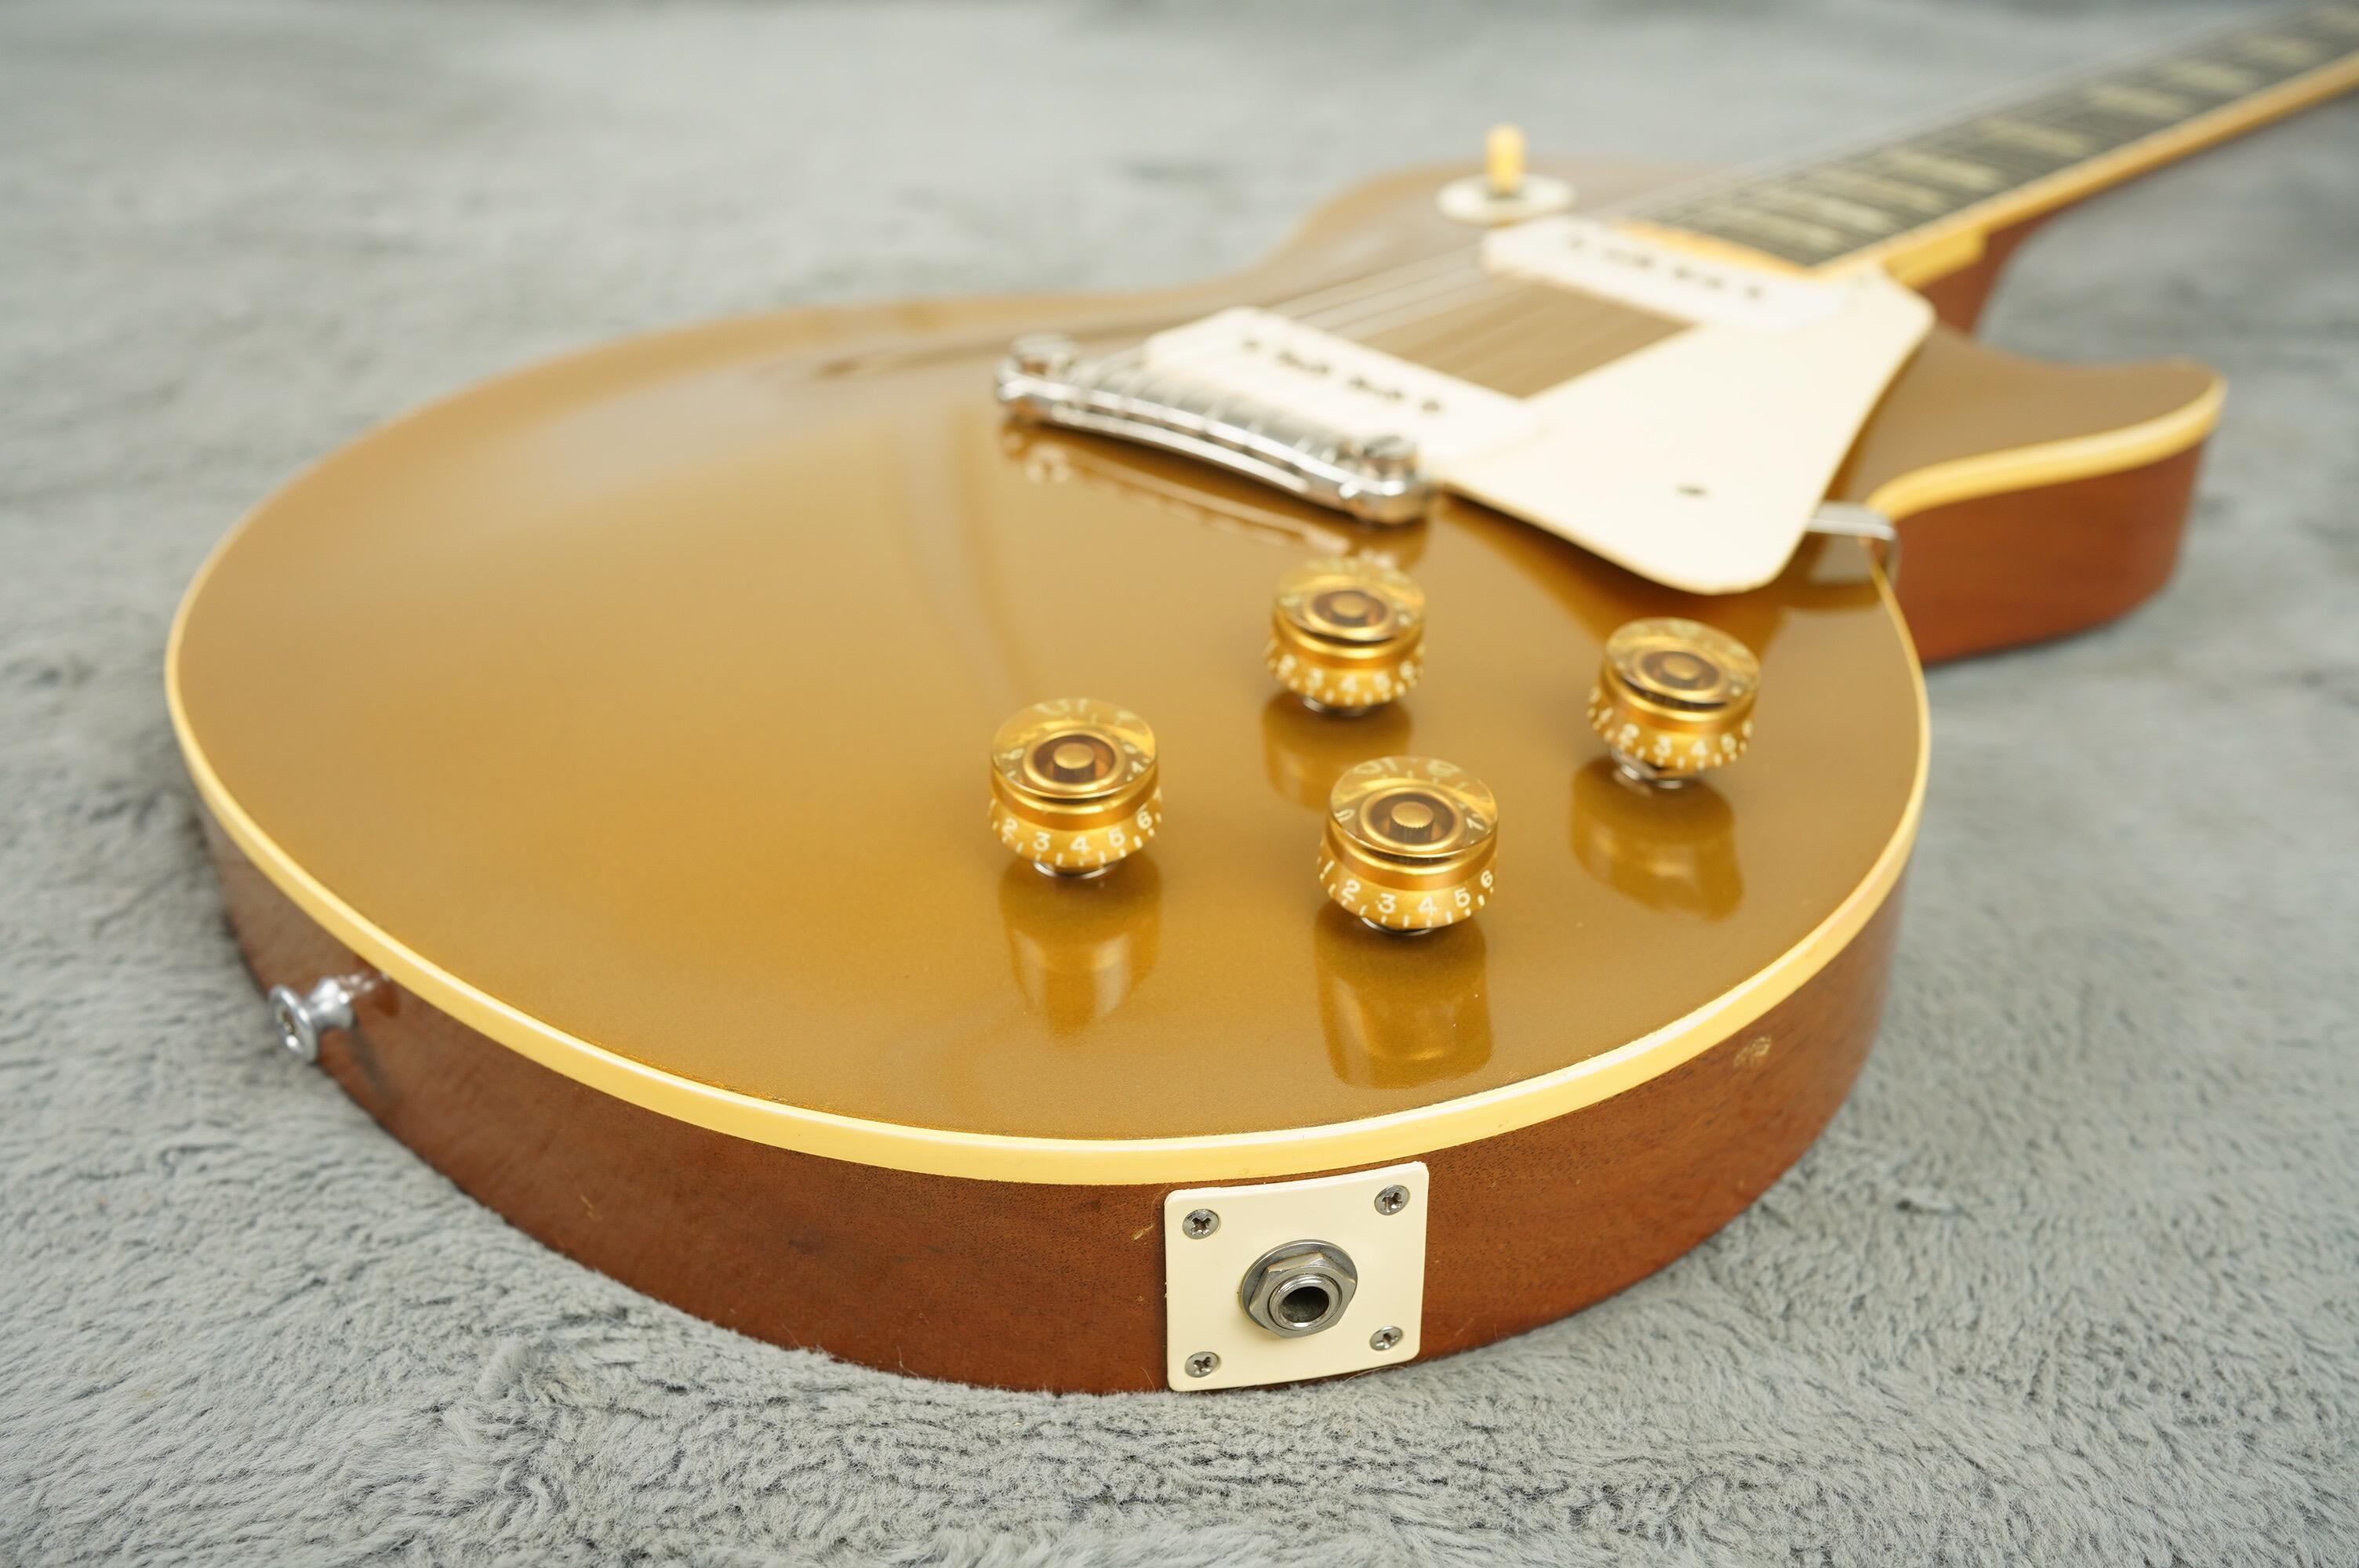 1955 Gibson Les Paul Standard